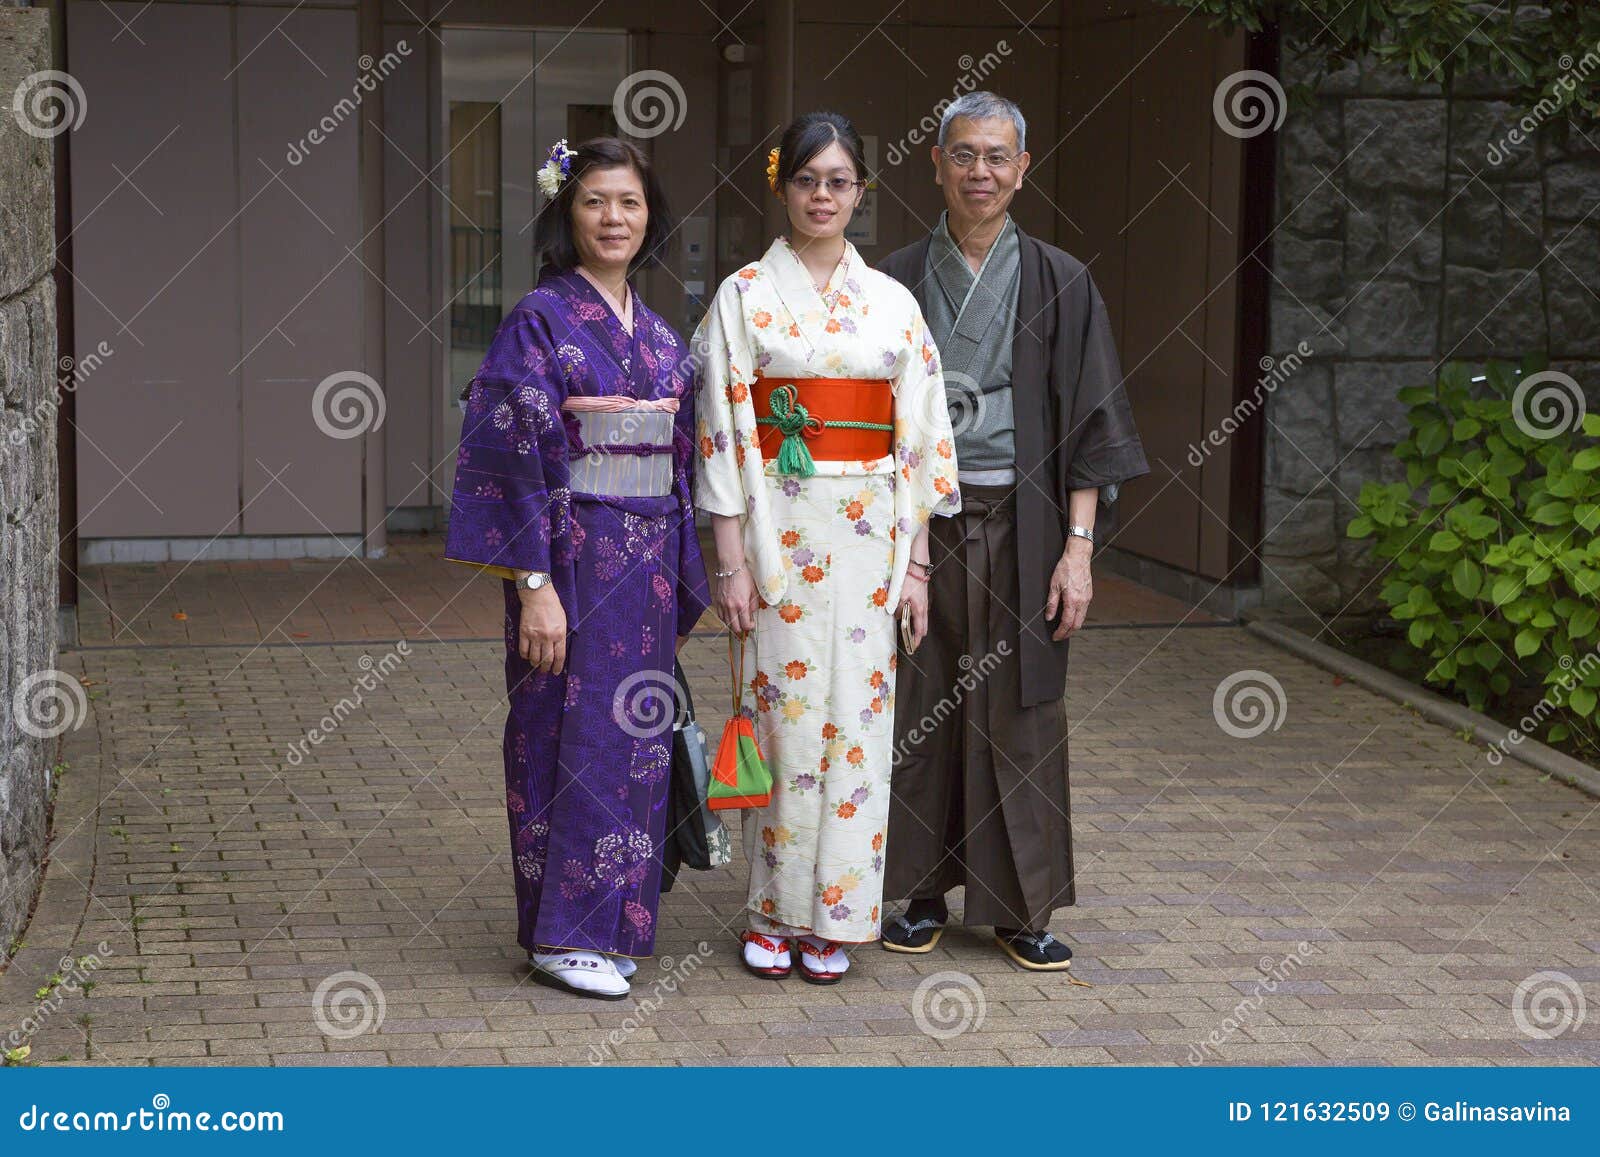 Japanese National Costume | estudioespositoymiguel.com.ar